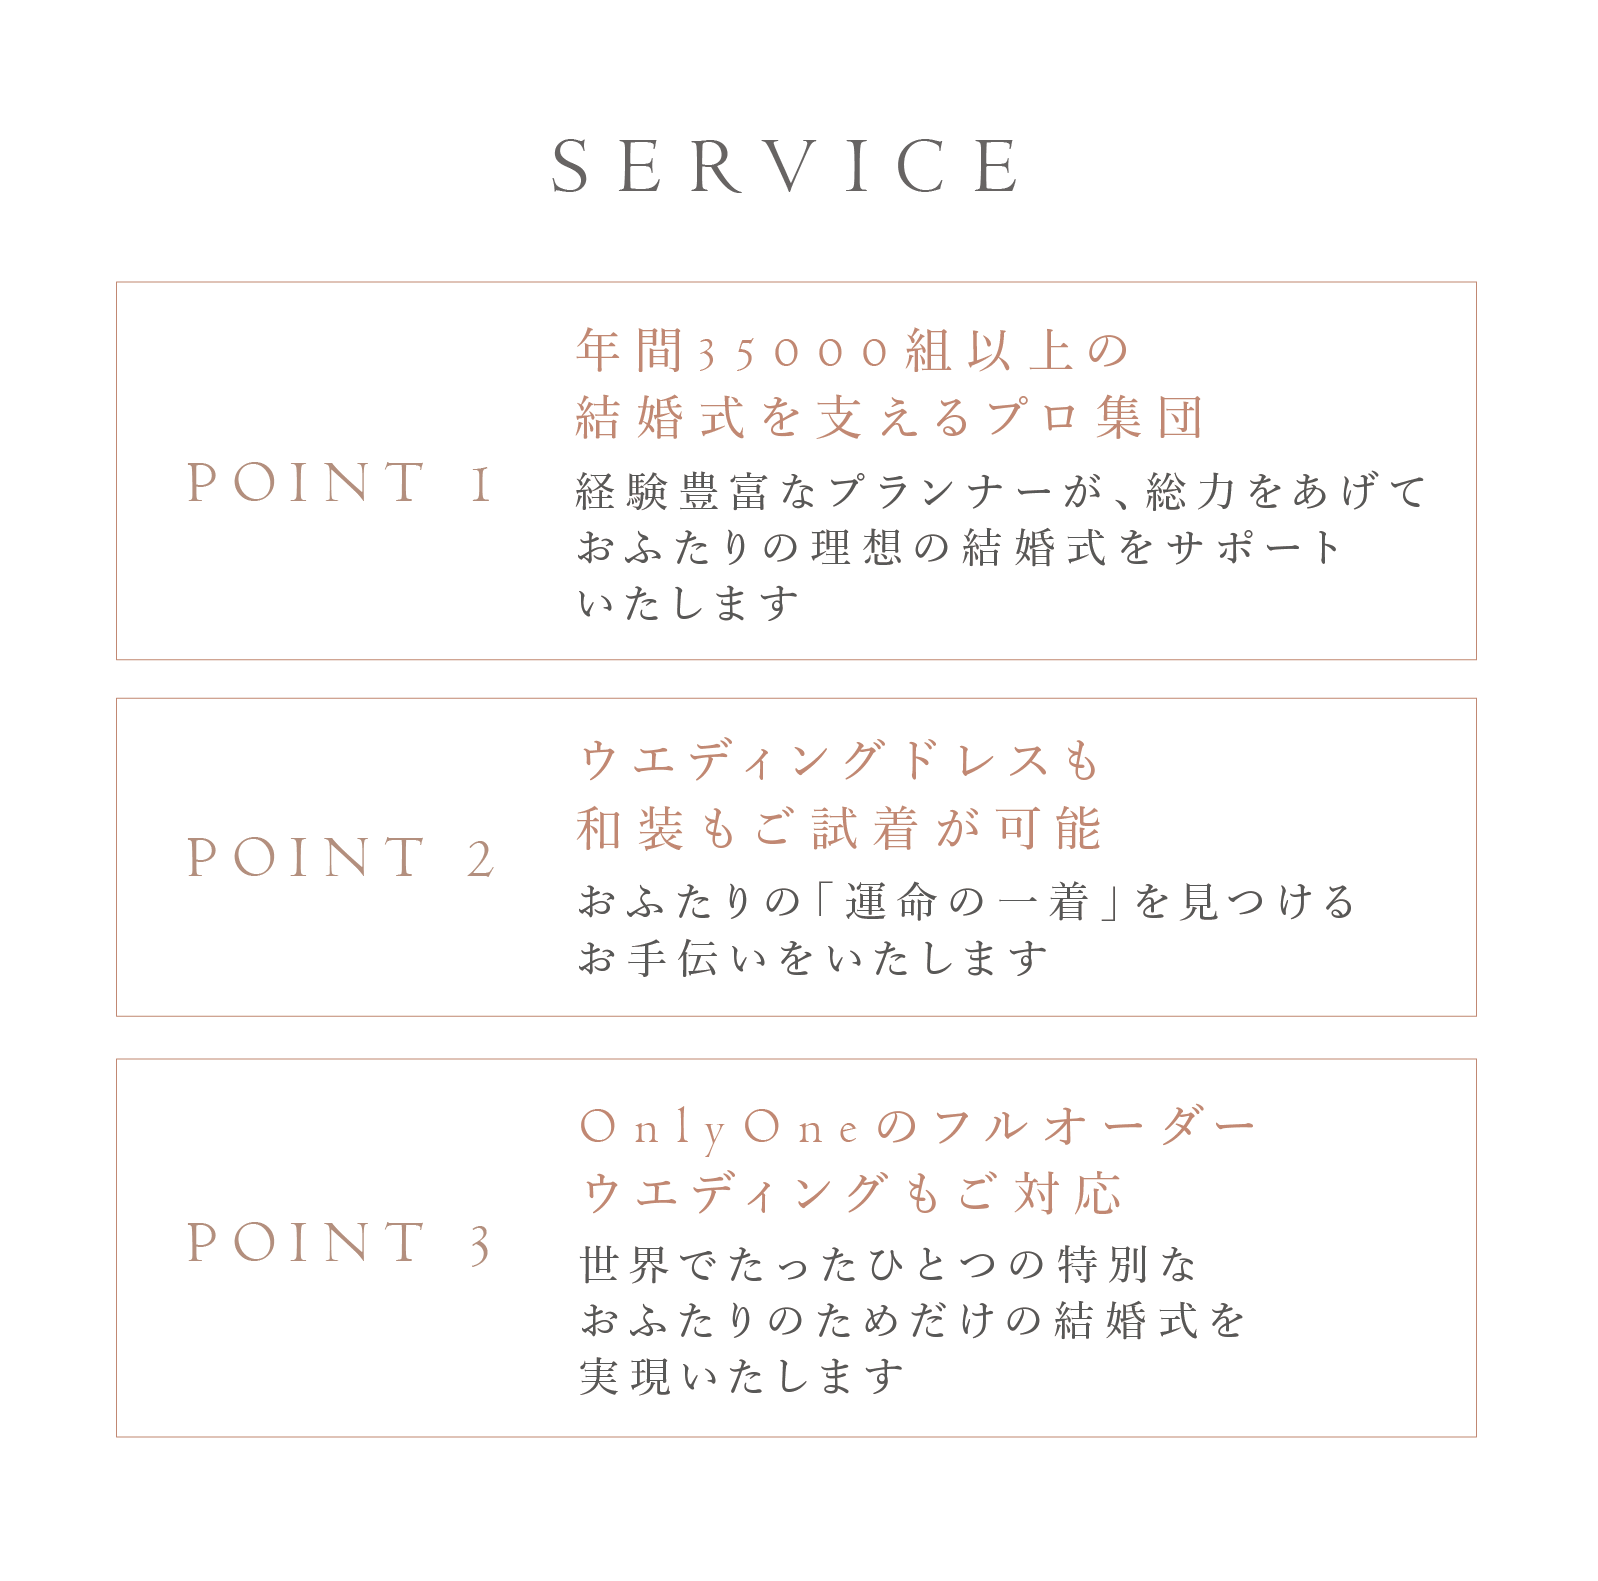 TAKAMI BRIDAL WEDDING DESK KYUSHUのサービスの特徴 スマートフォン用の画像